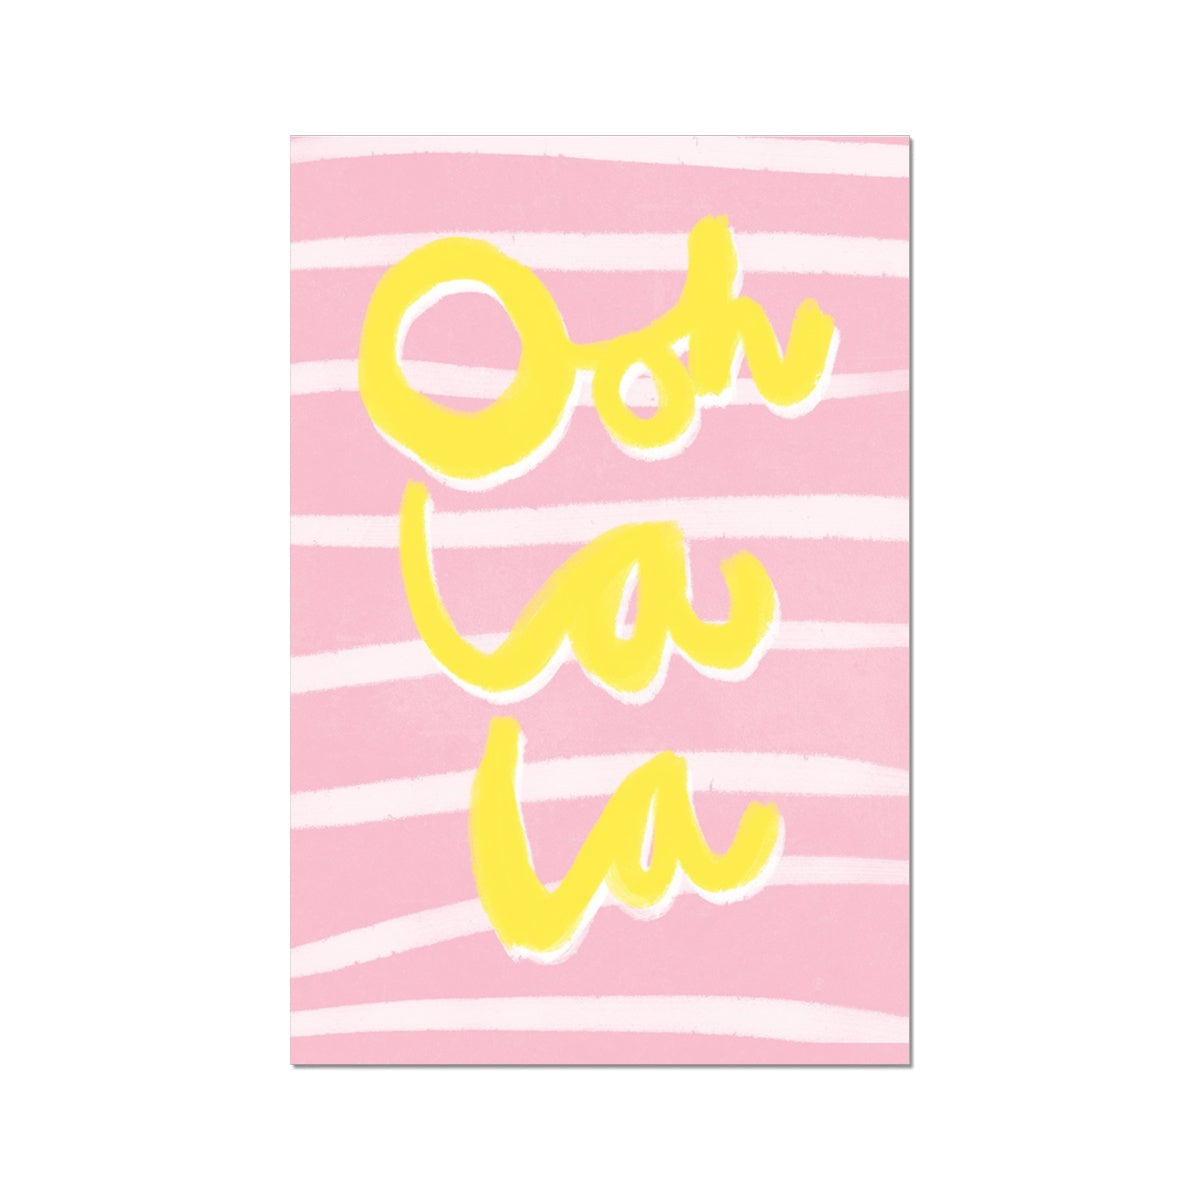 Ooh La La Art Print - Pink, White and Yellow Fine Art Print